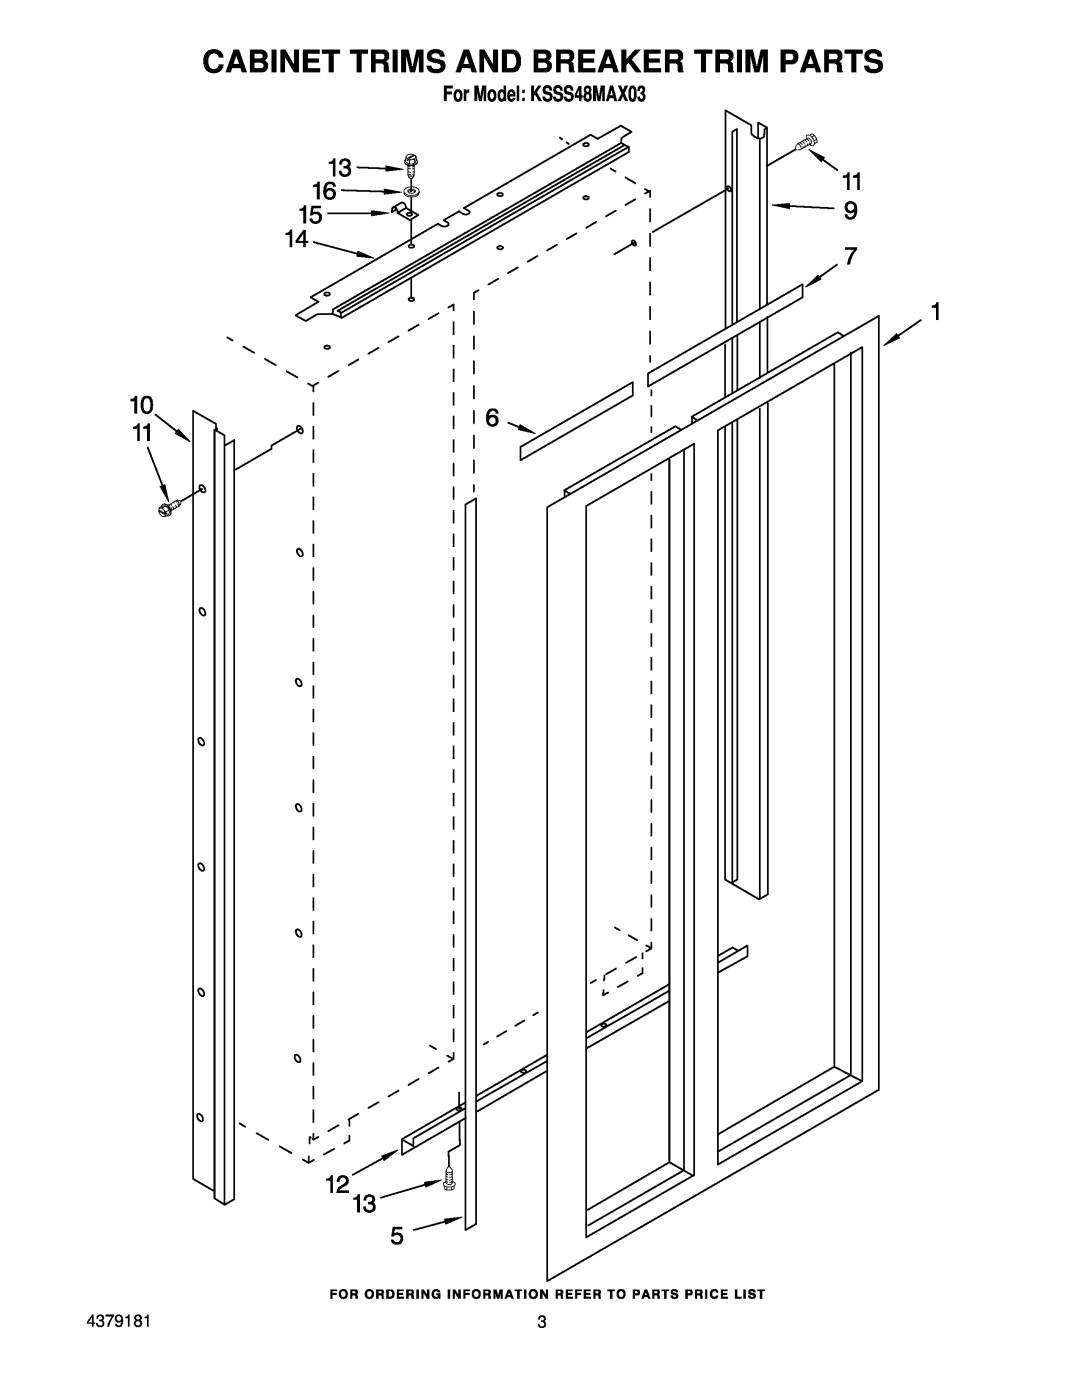 KitchenAid manual Cabinet Trims And Breaker Trim Parts, For Model KSSS48MAX03 